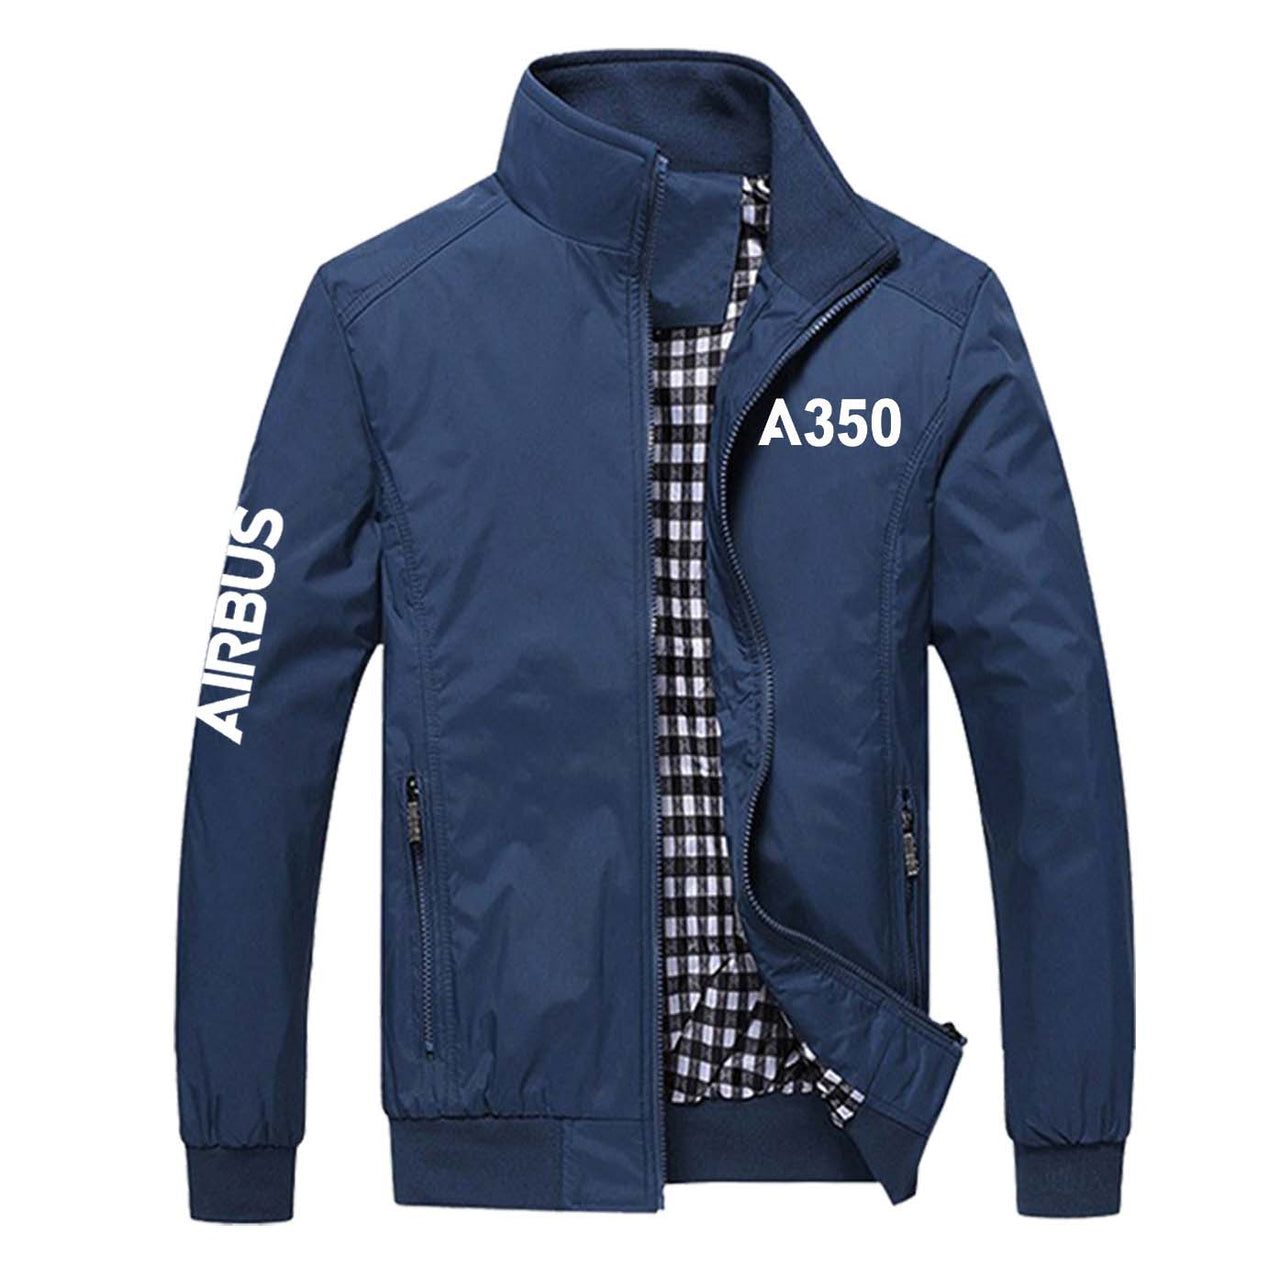 A350 Flat Text Designed Stylish Jackets